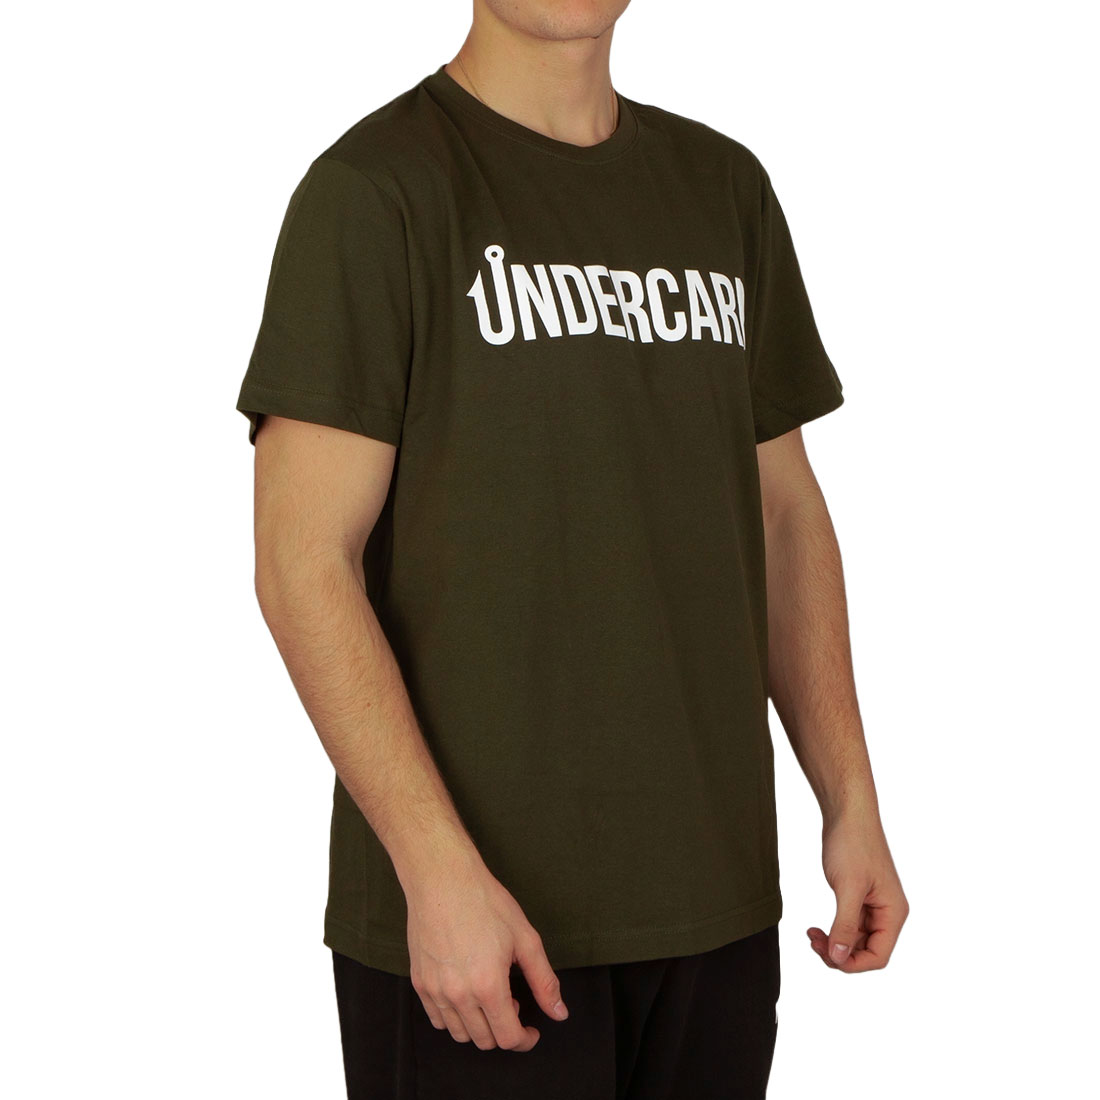 T-shirt for a fisherman undercarp